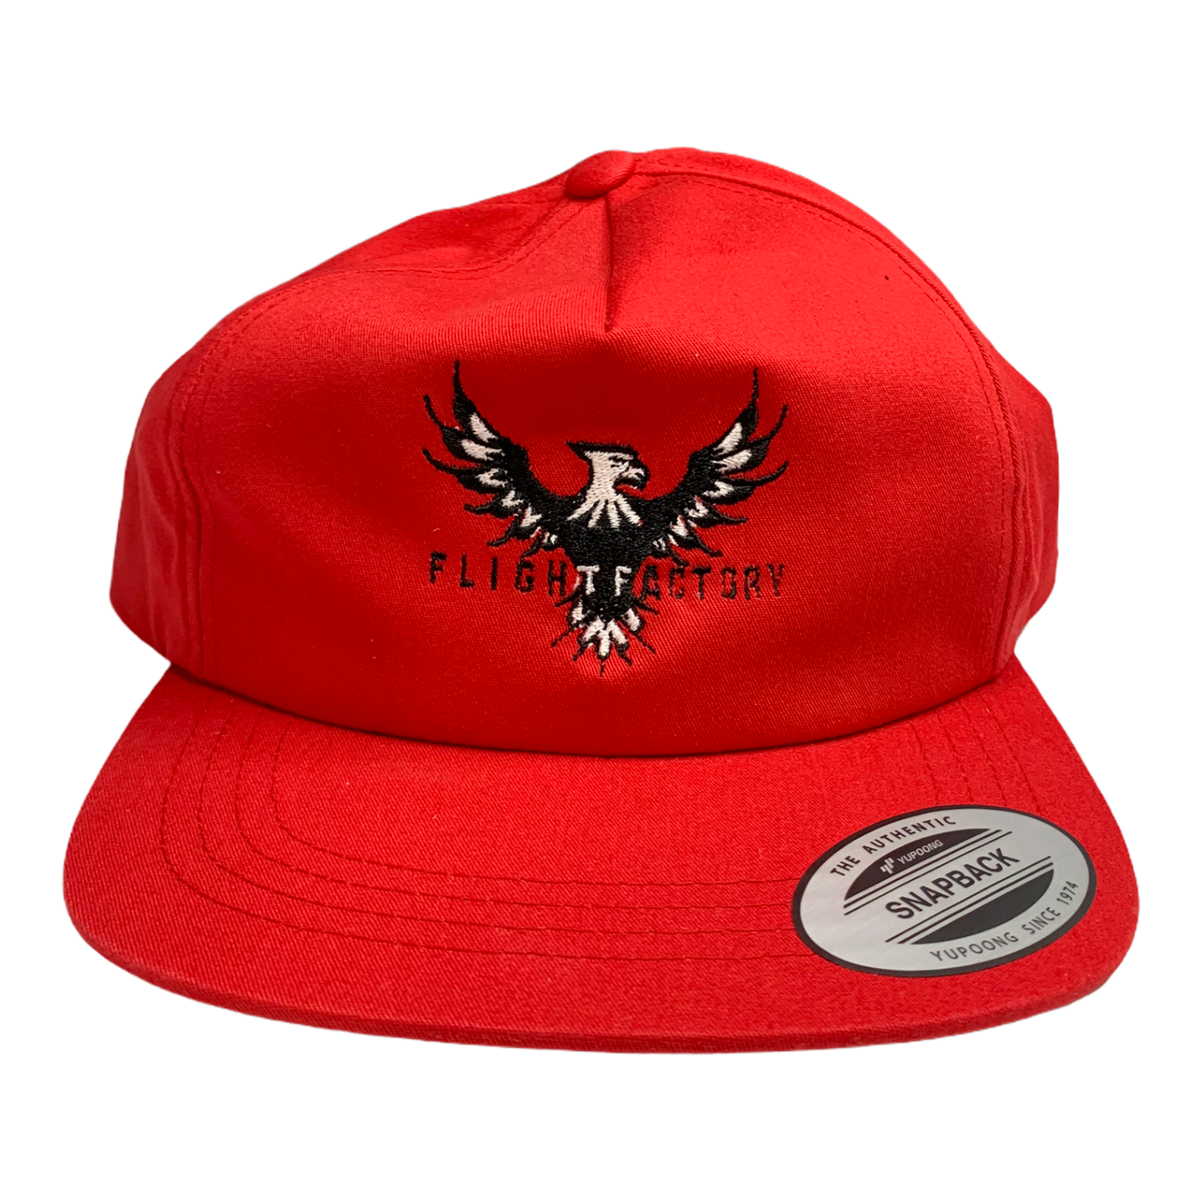 Flight Factory Flat Bill Unstructured Snapback Hat